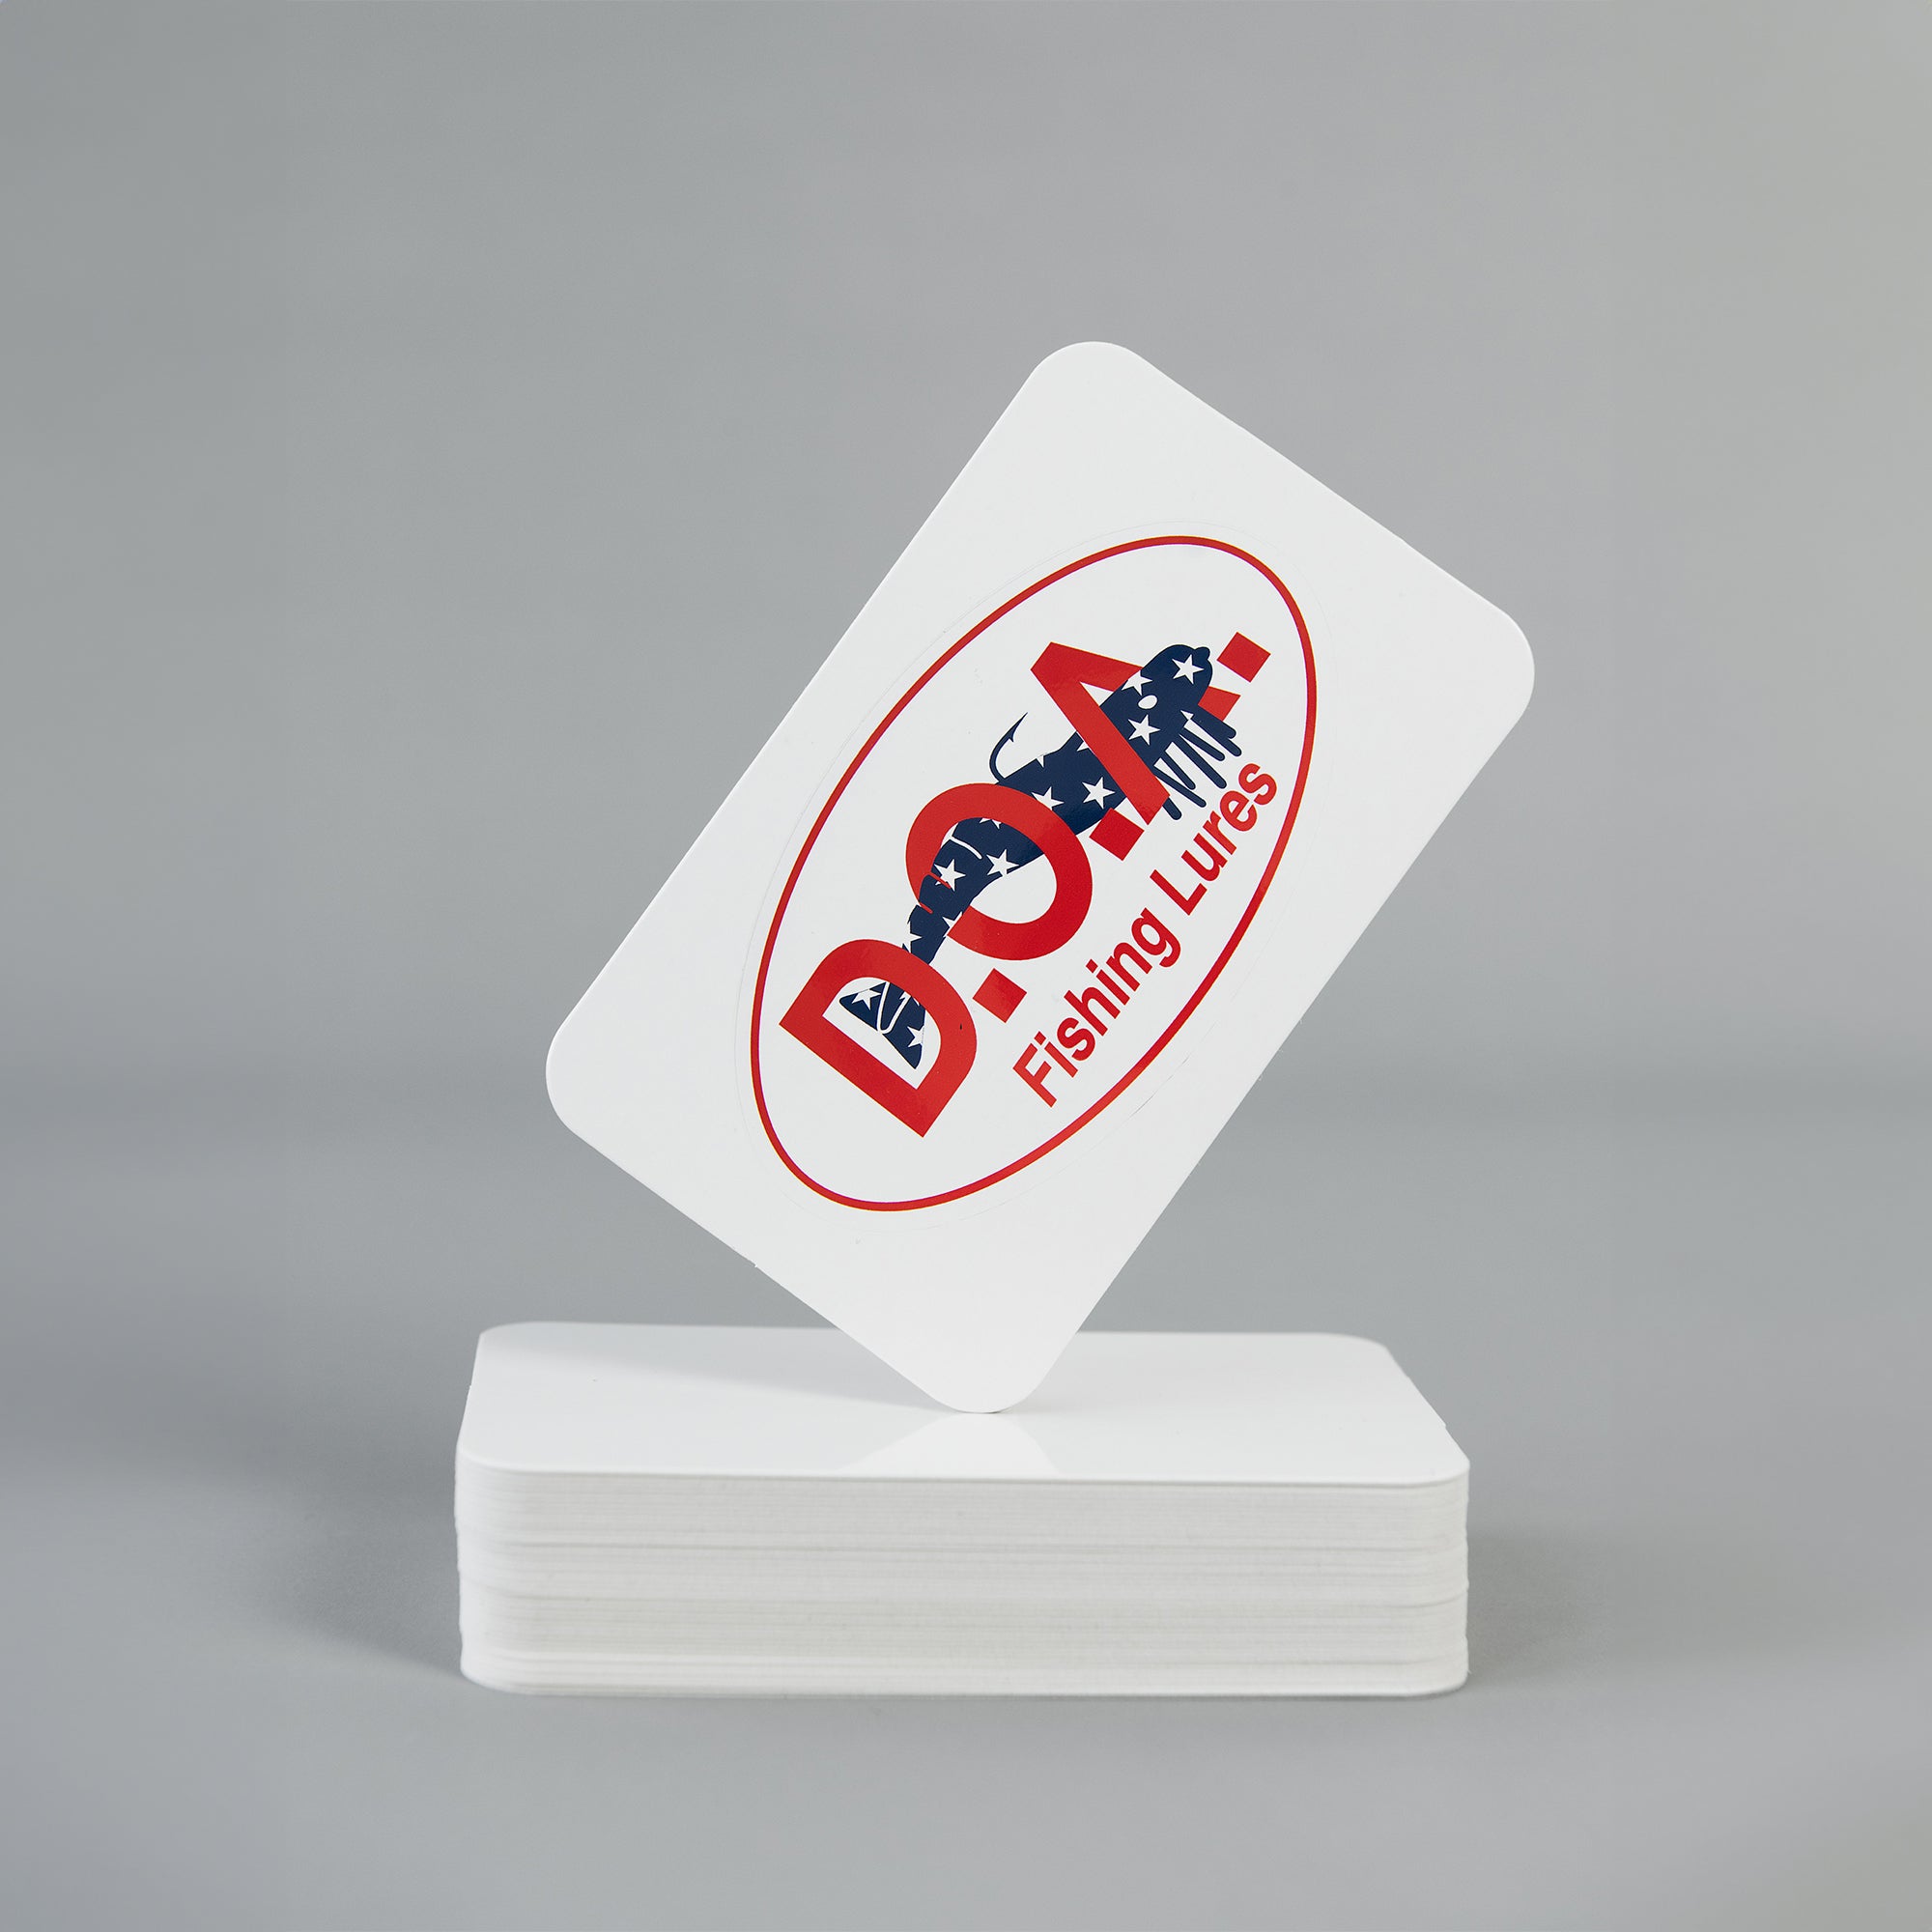 D.O.A. Digital Gift Card – D.O.A. Lures